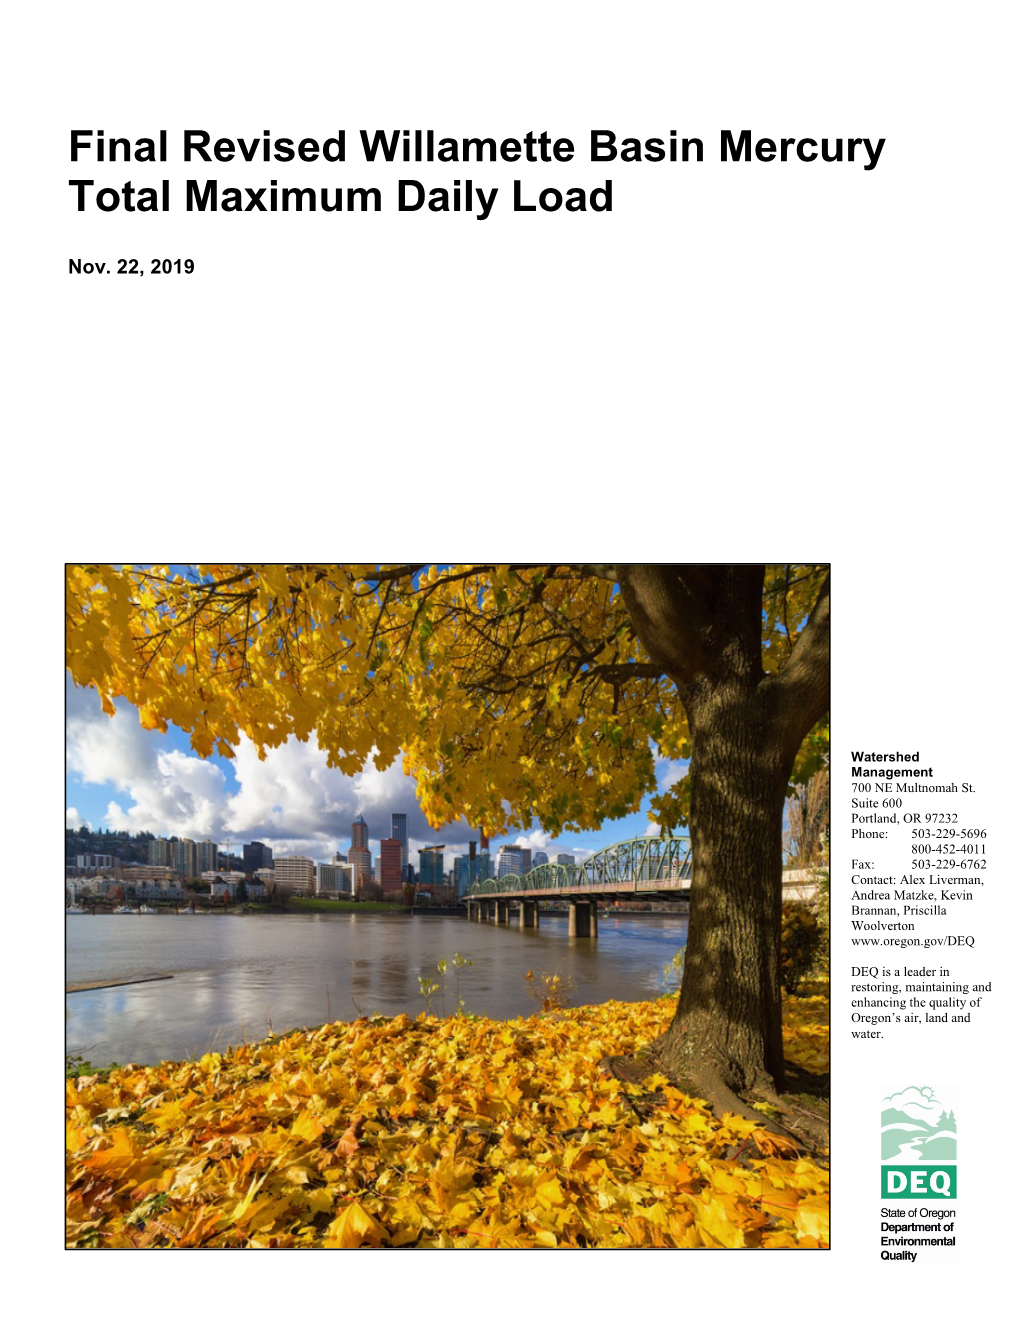 Final Revised Willamette Basin Mercury Total Maximum Daily Load